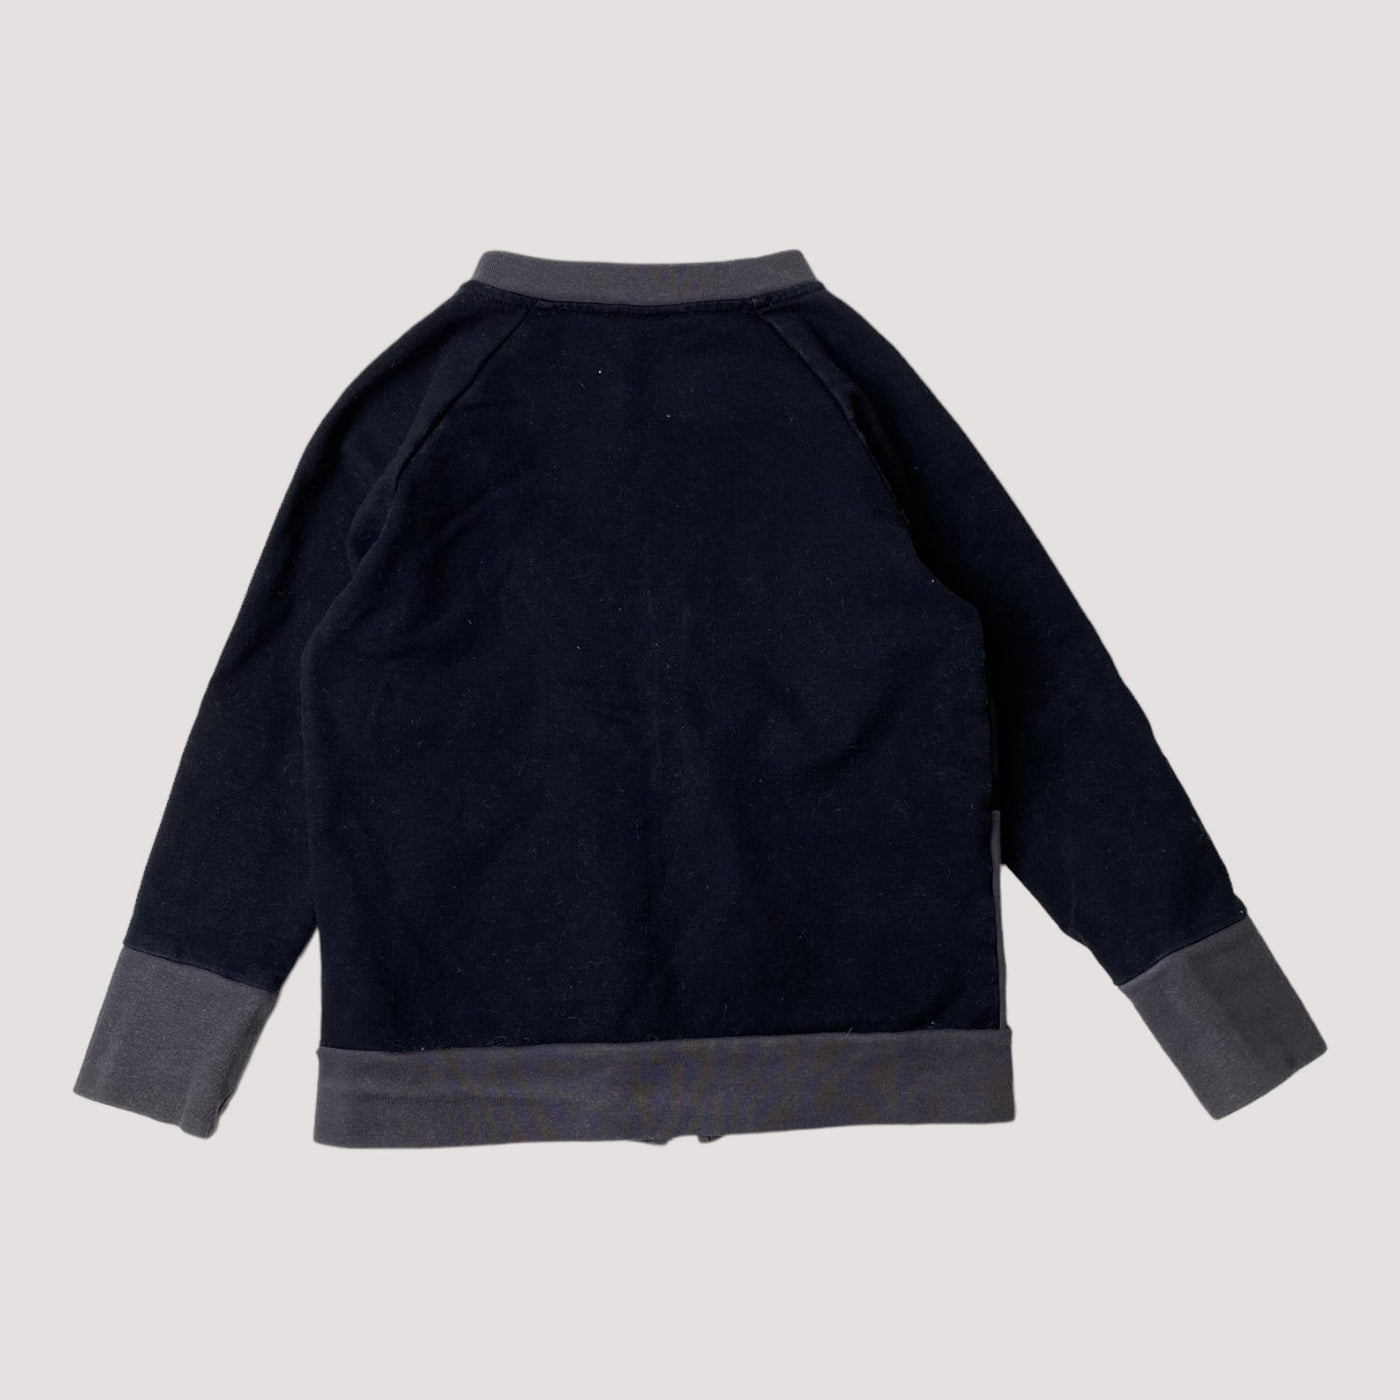 zipper sweat jacket, black/taupe grey | 98/104cm